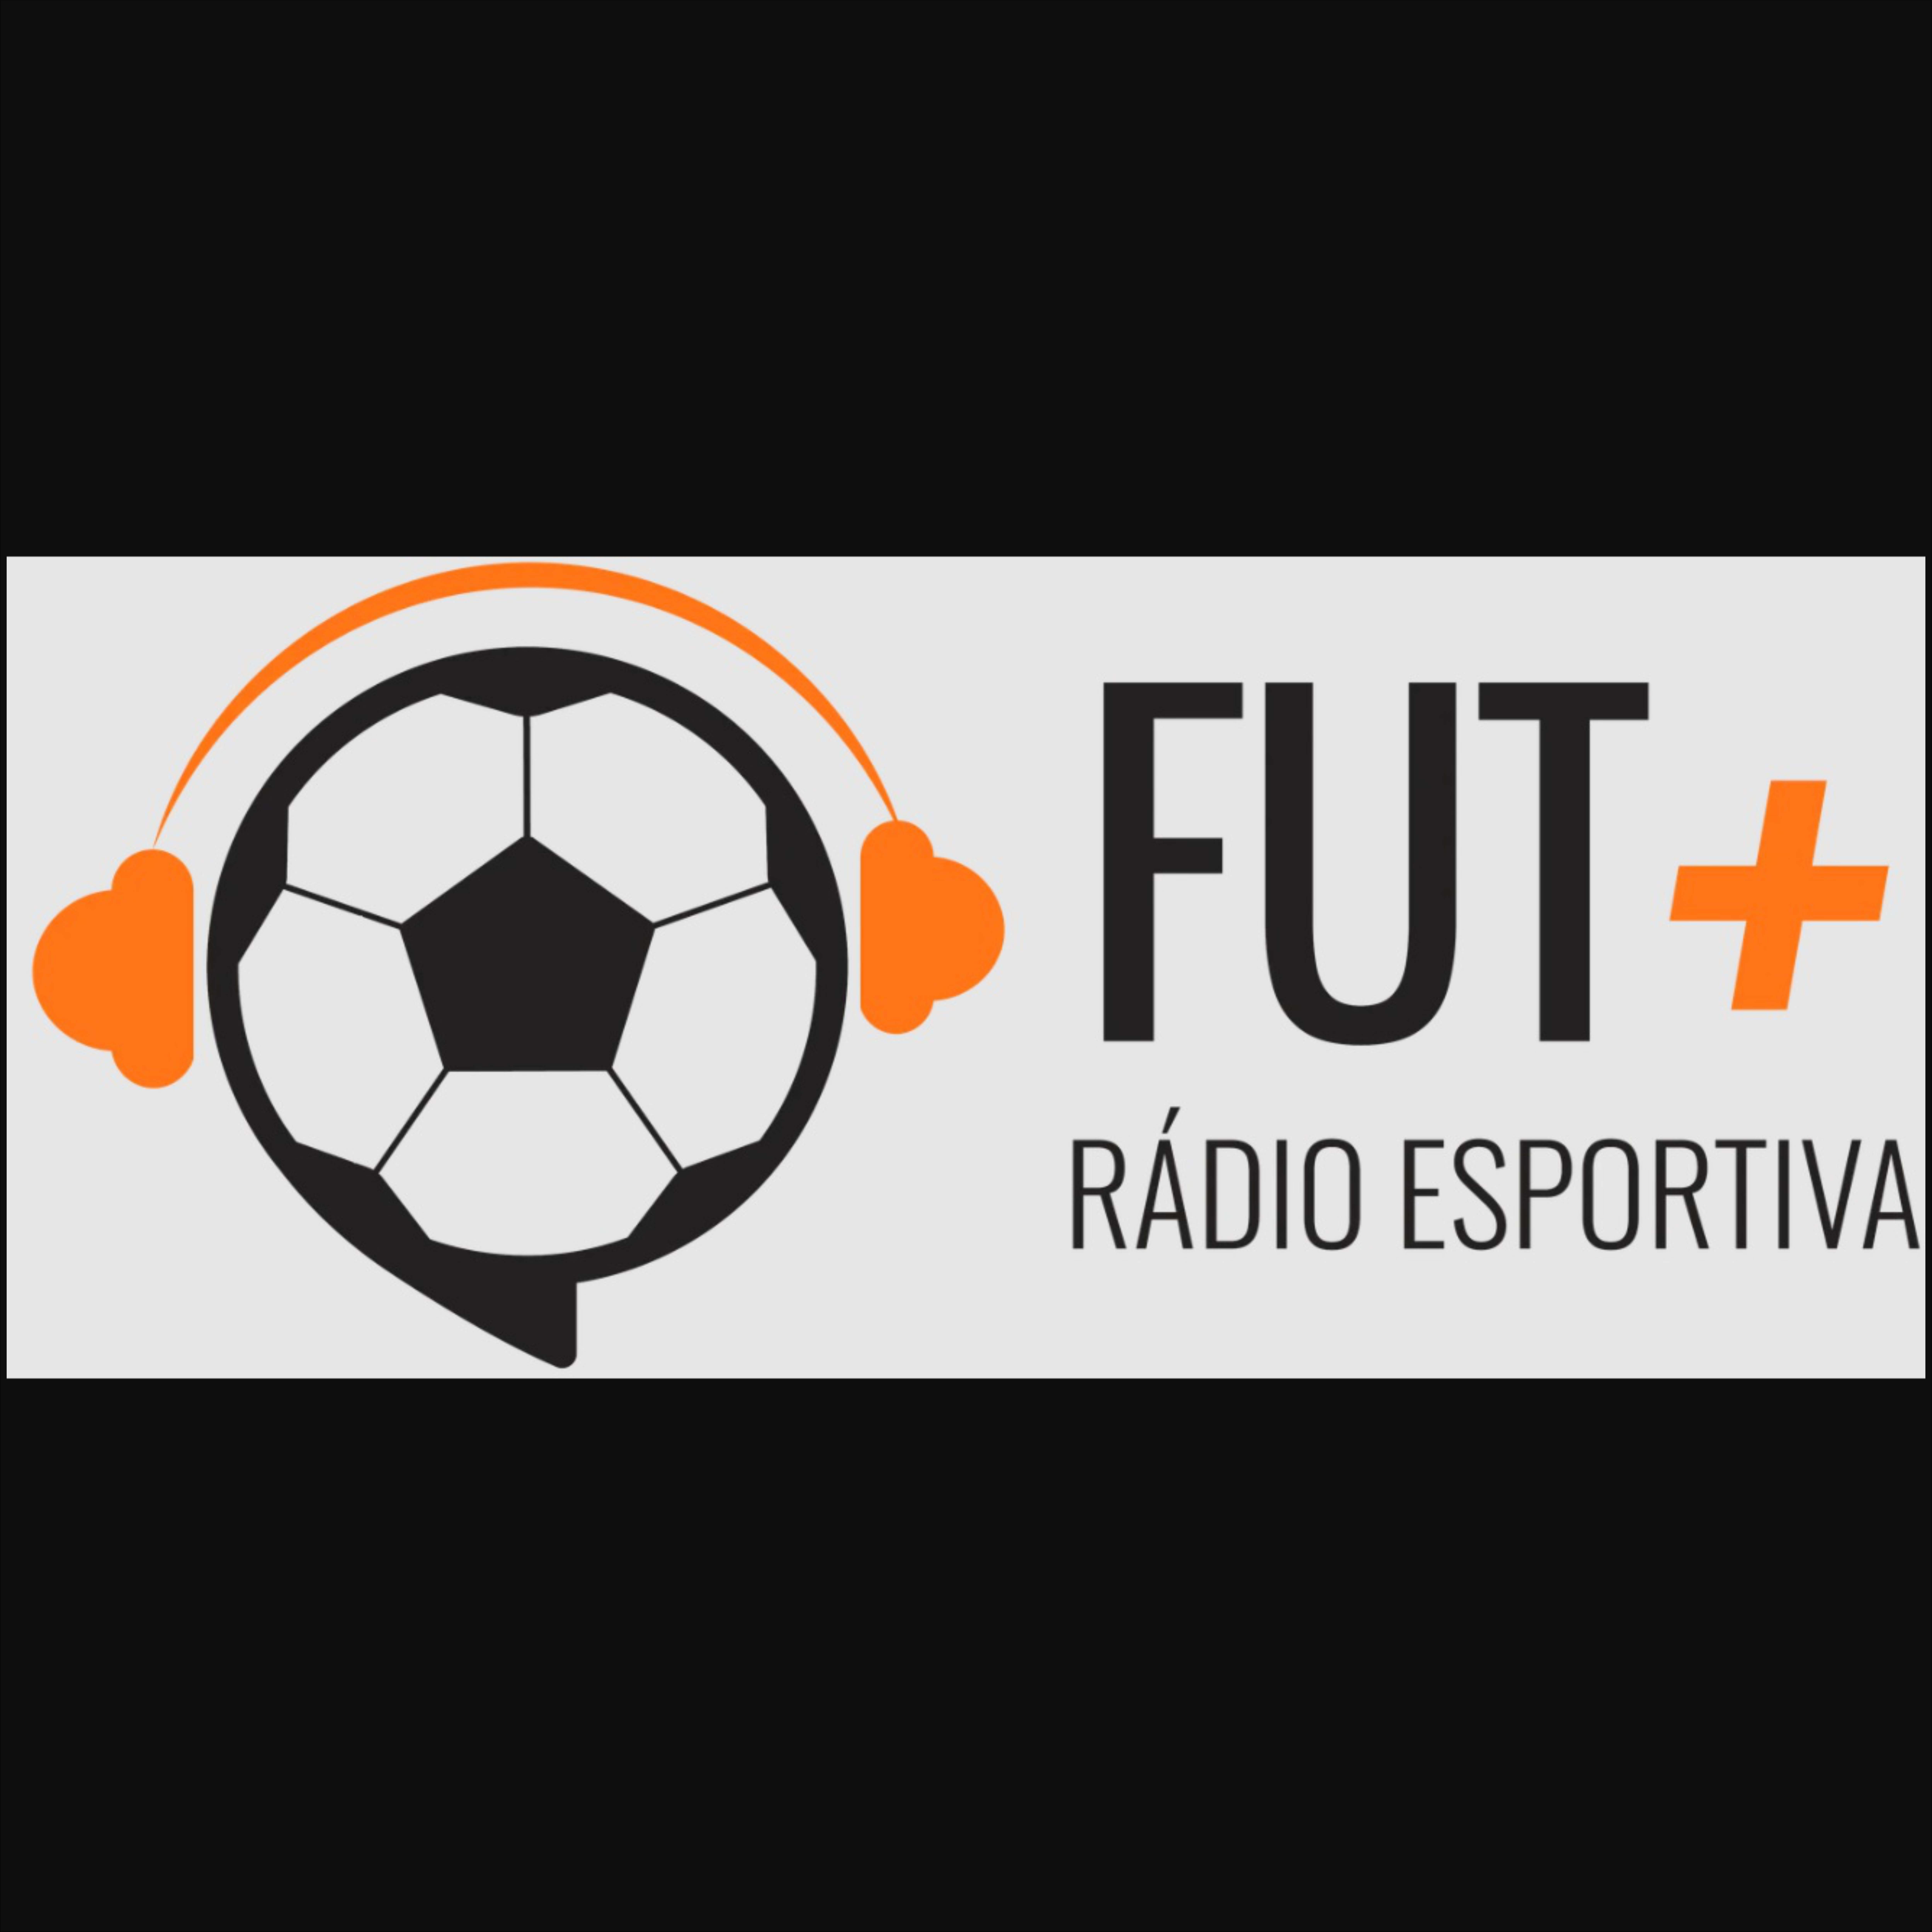 Rádio Esportiva FUT+